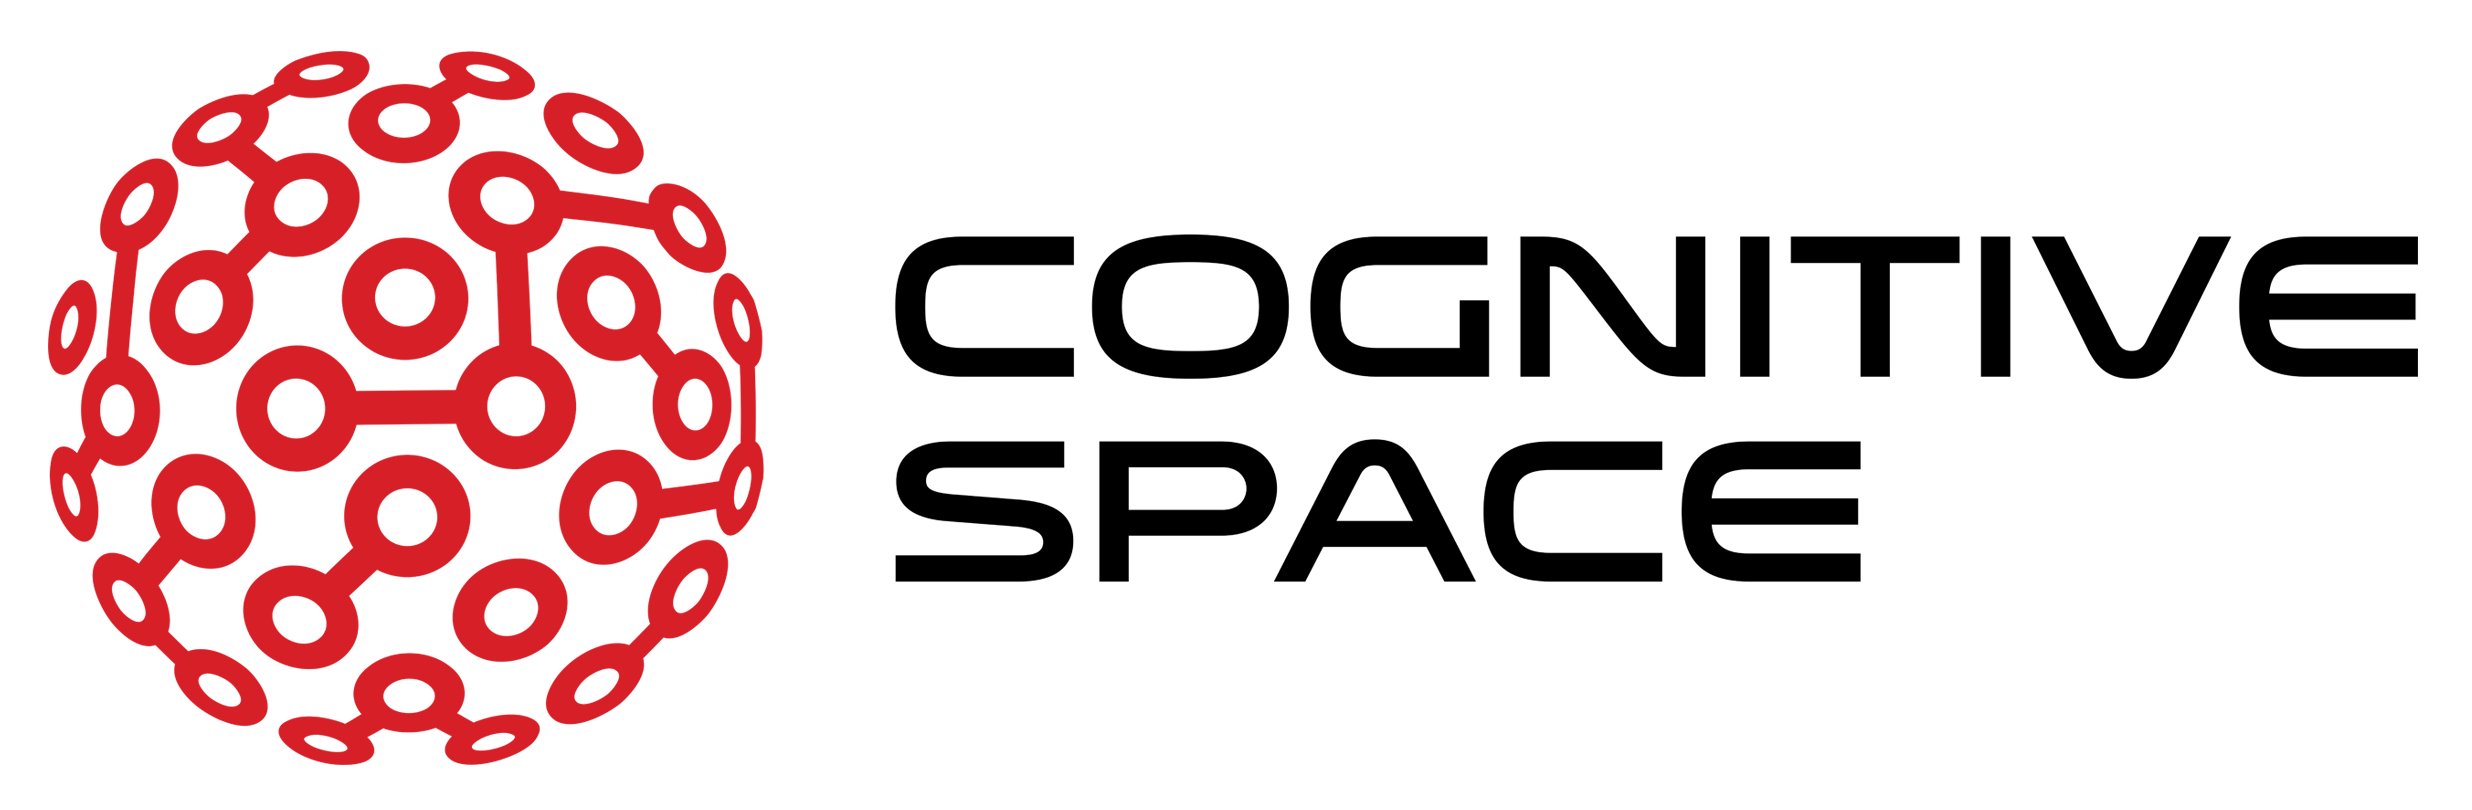 Cognitive-Space_Transparent_Logo (1).jpg